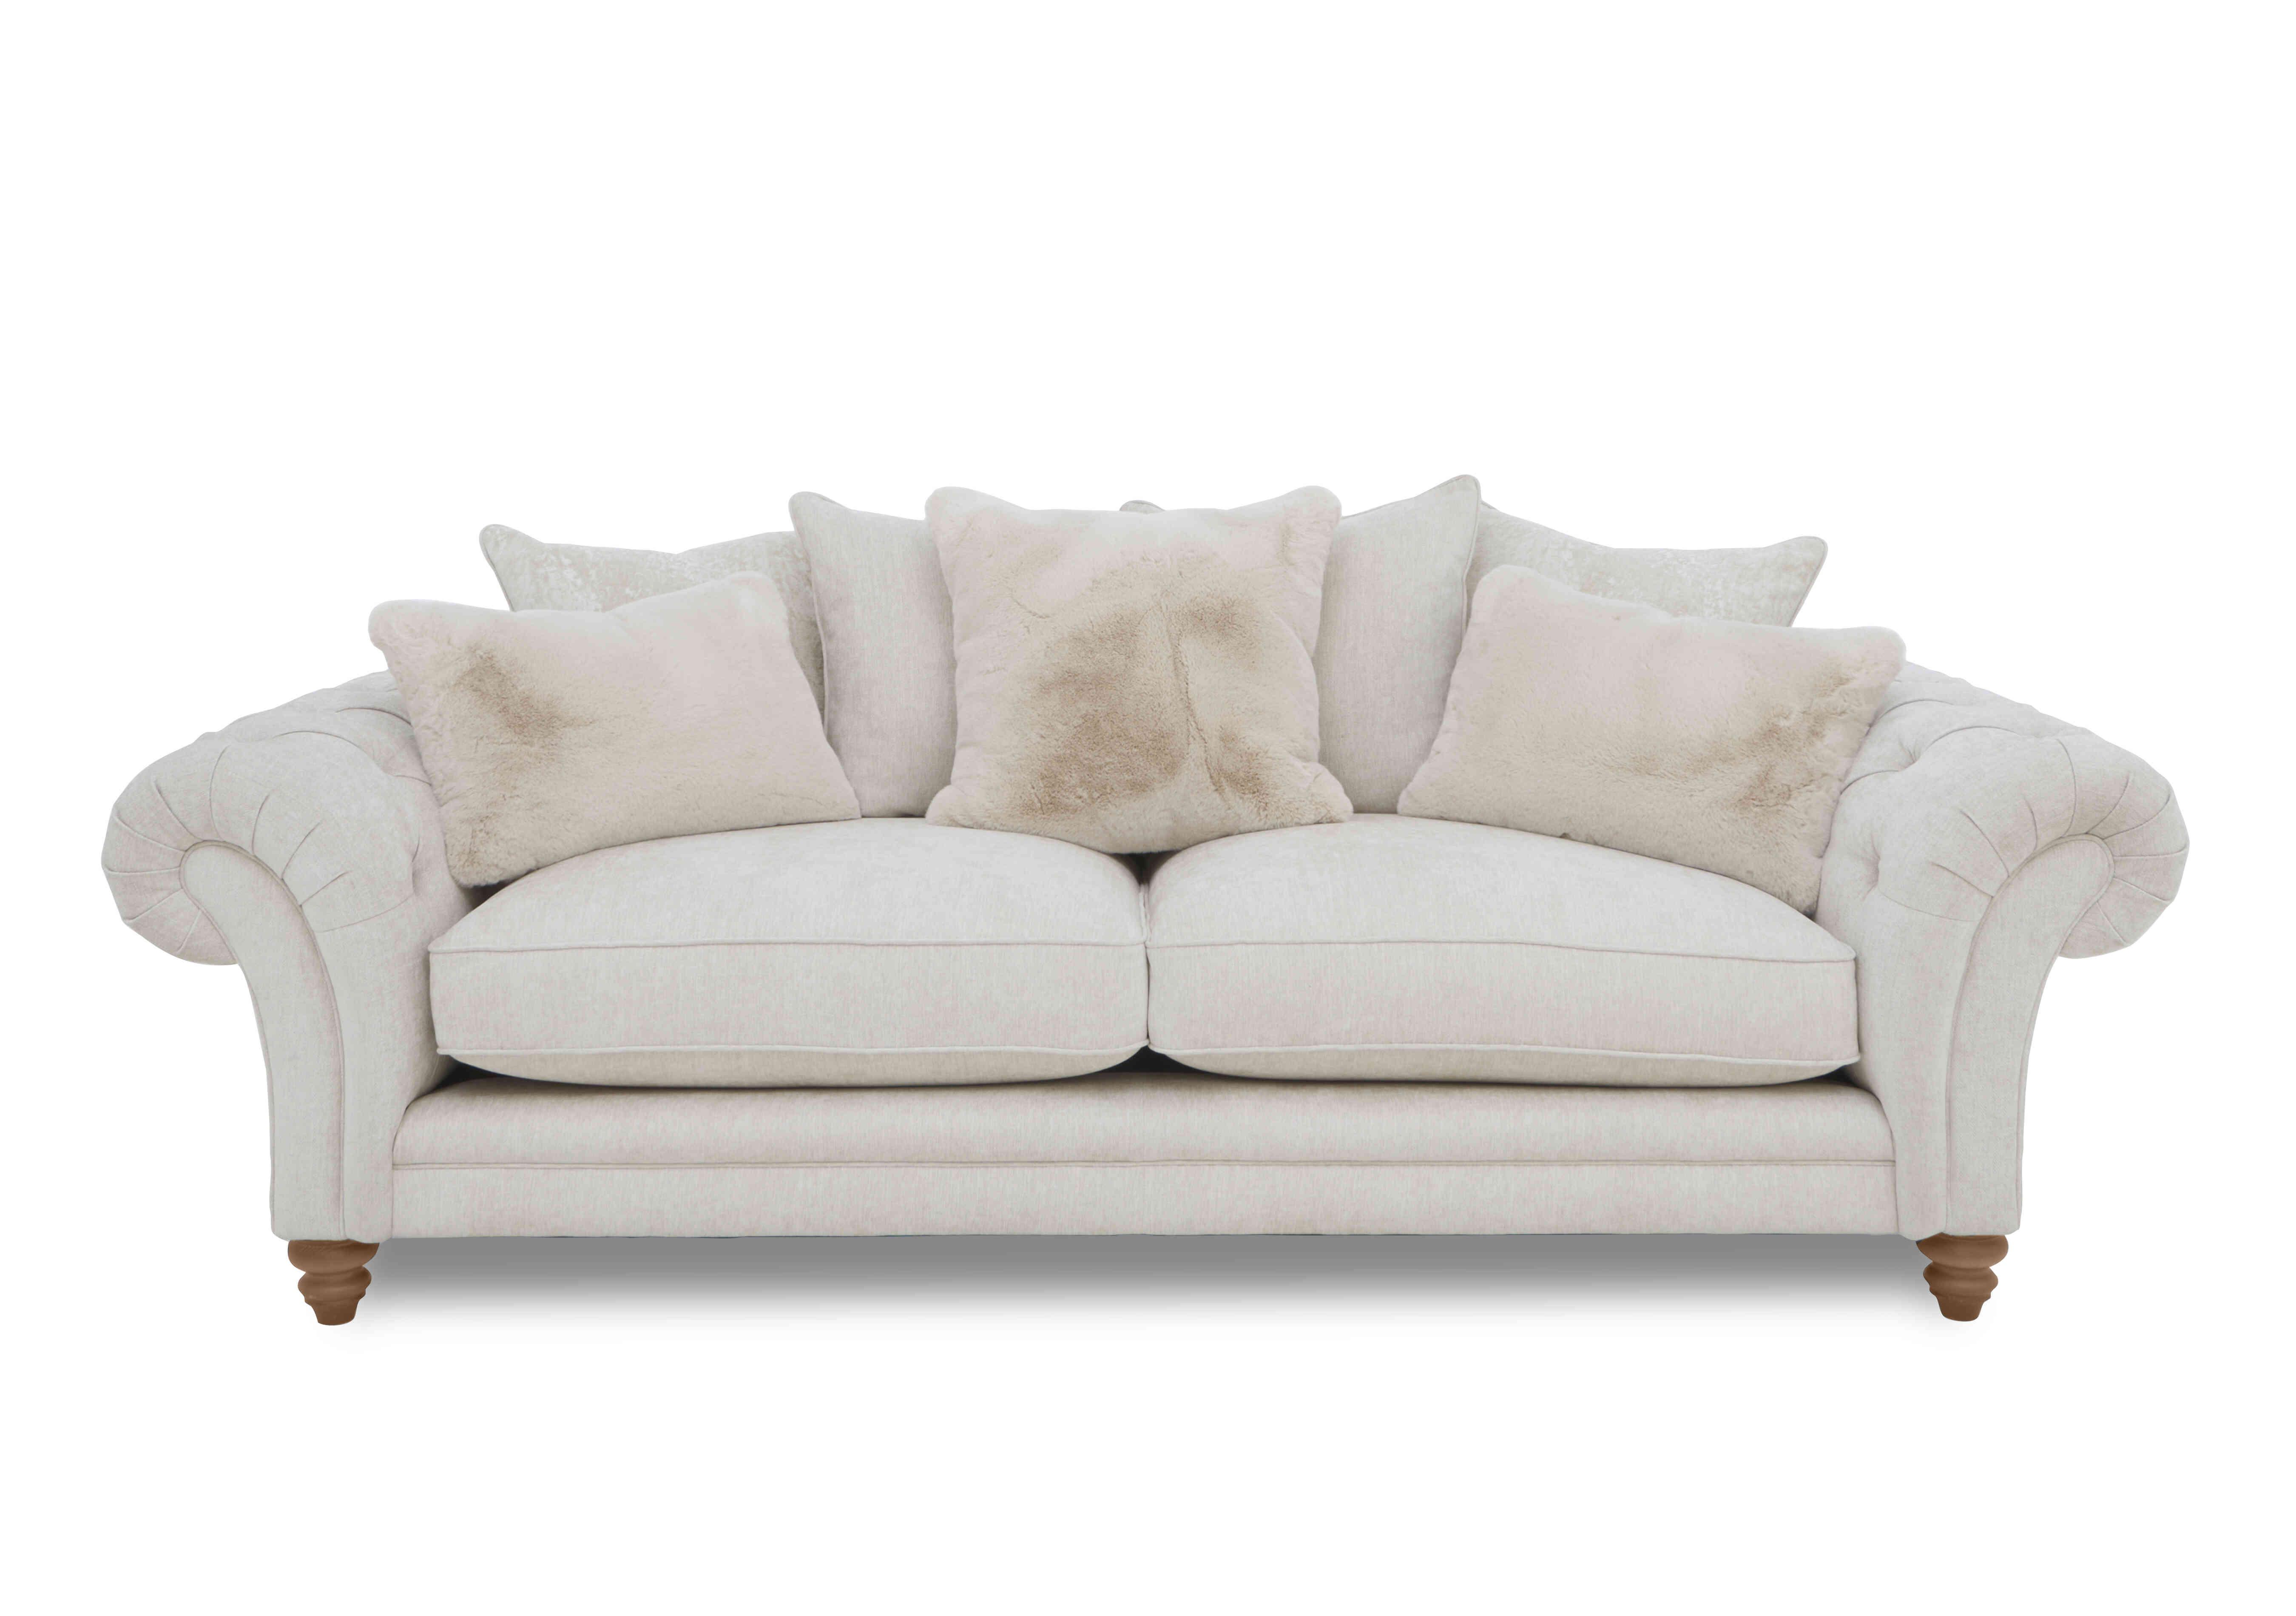 Blenheim 4 Seater Scatter Back Sofa in Darwin Ivory Of on Furniture Village